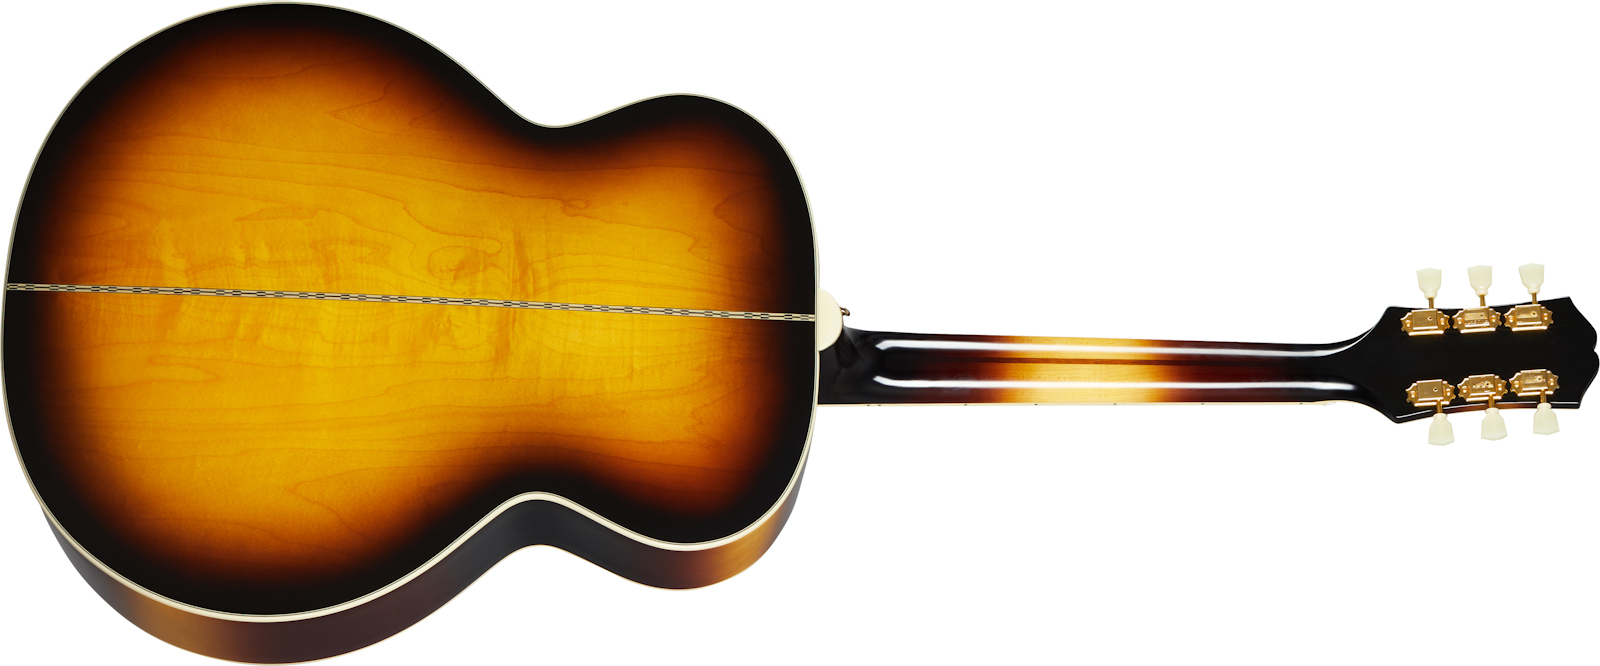 Epiphone J-200 Inspired By Gibson Jumbo Epicea Erable Lau - Aged Vintage Sunburst - Electro acoustic guitar - Variation 1